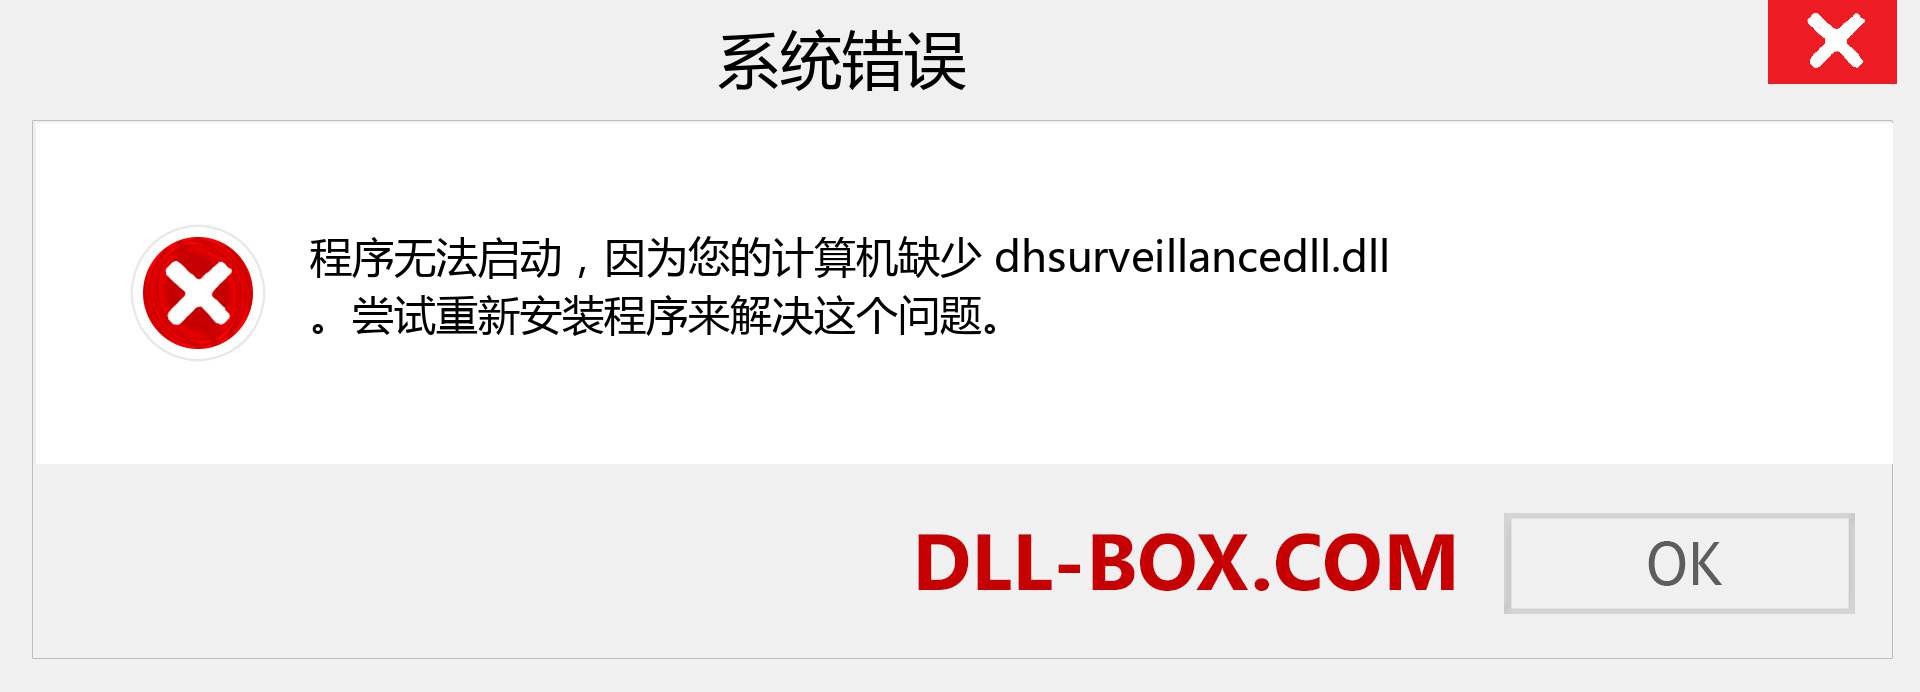 dhsurveillancedll.dll 文件丢失？。 适用于 Windows 7、8、10 的下载 - 修复 Windows、照片、图像上的 dhsurveillancedll dll 丢失错误